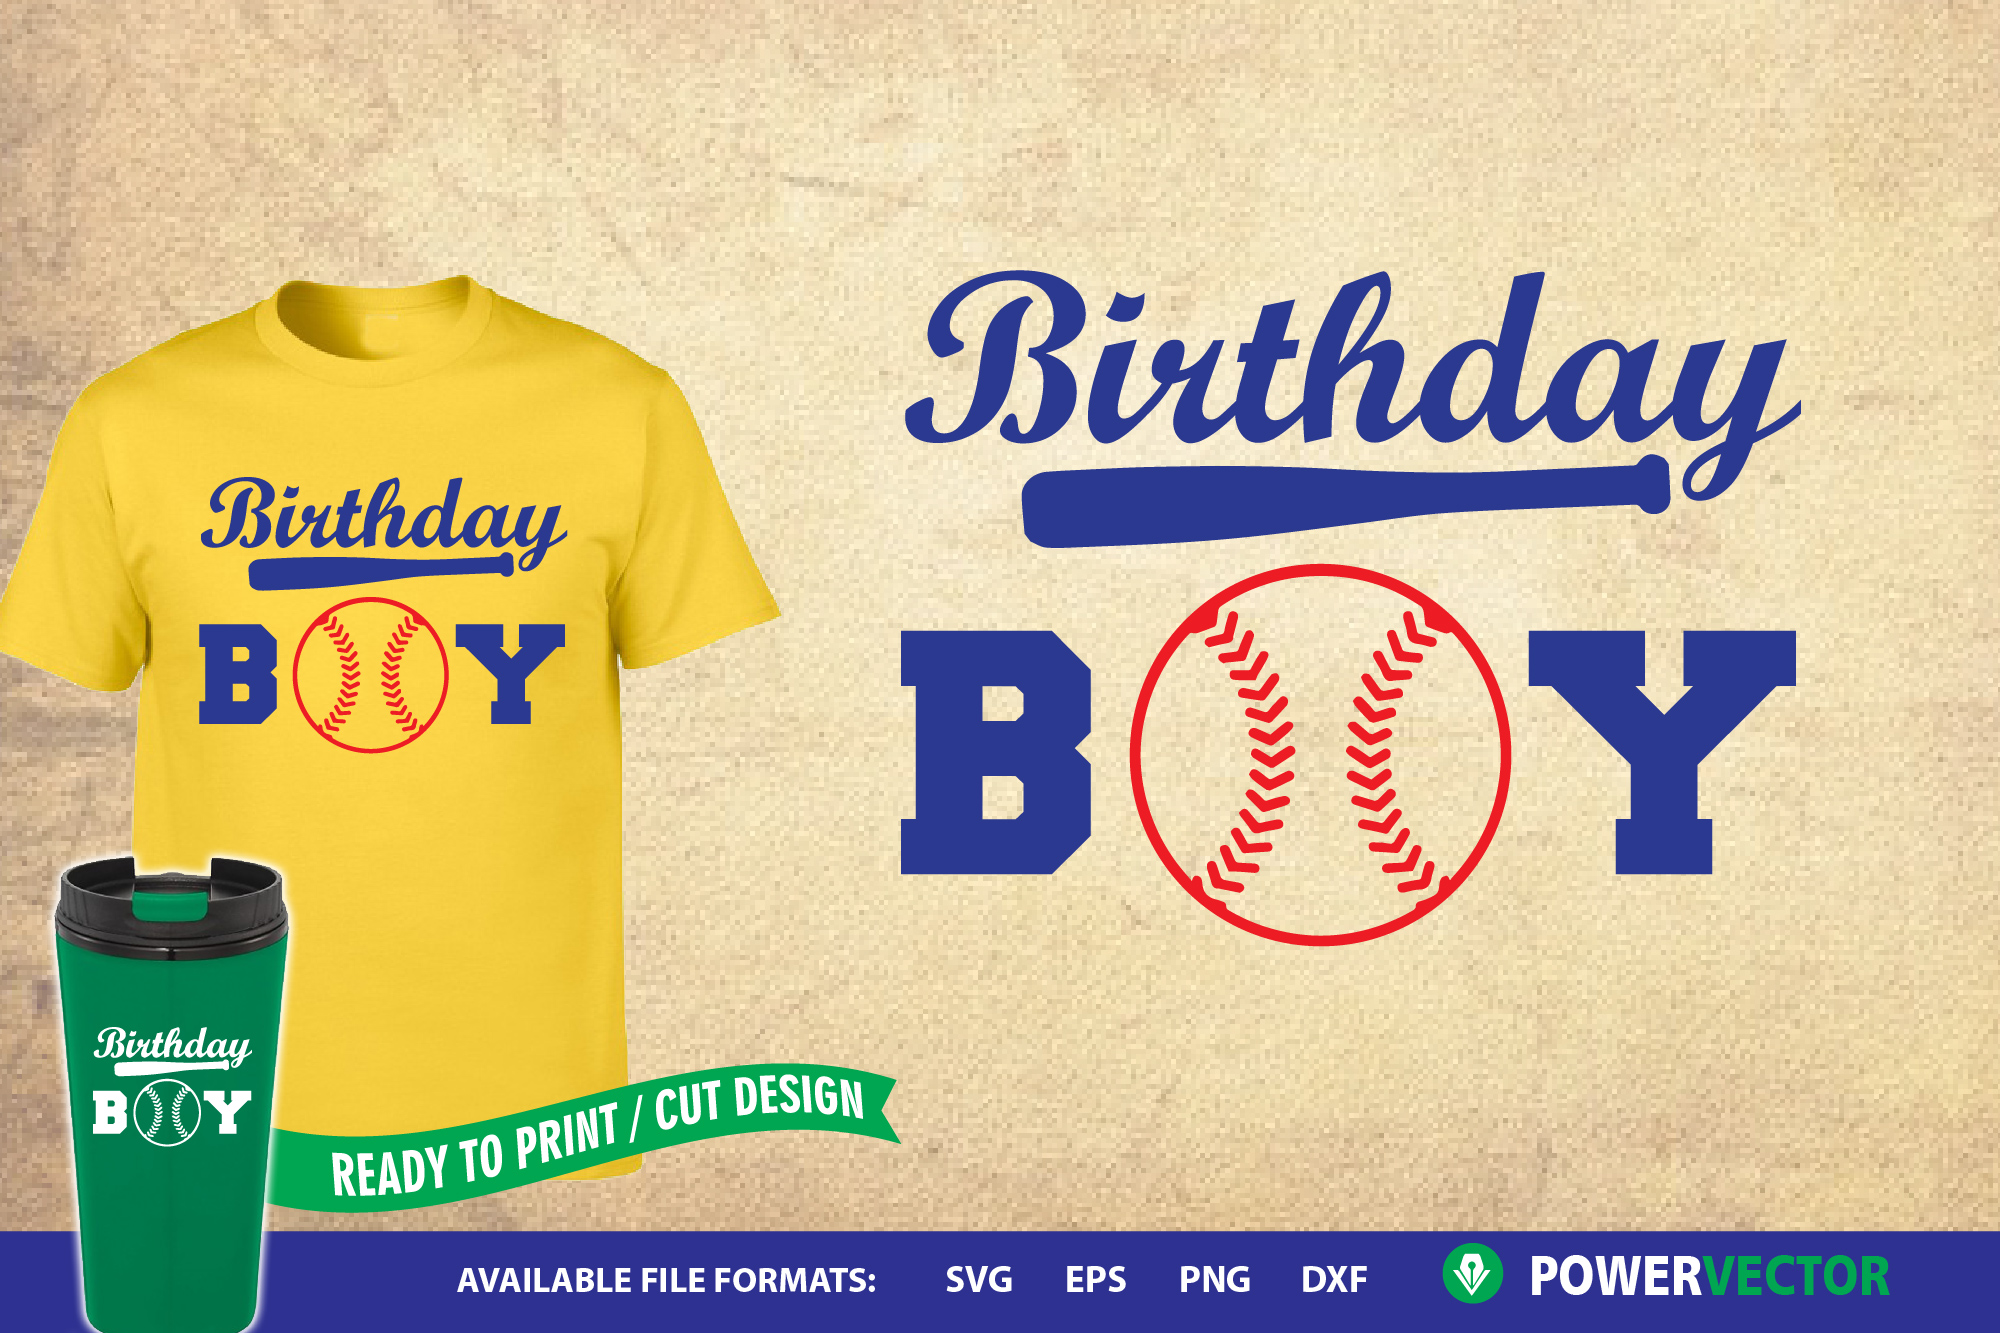 Download Birthday Boy SVG| Birthday Family Attire Print, Cut Files